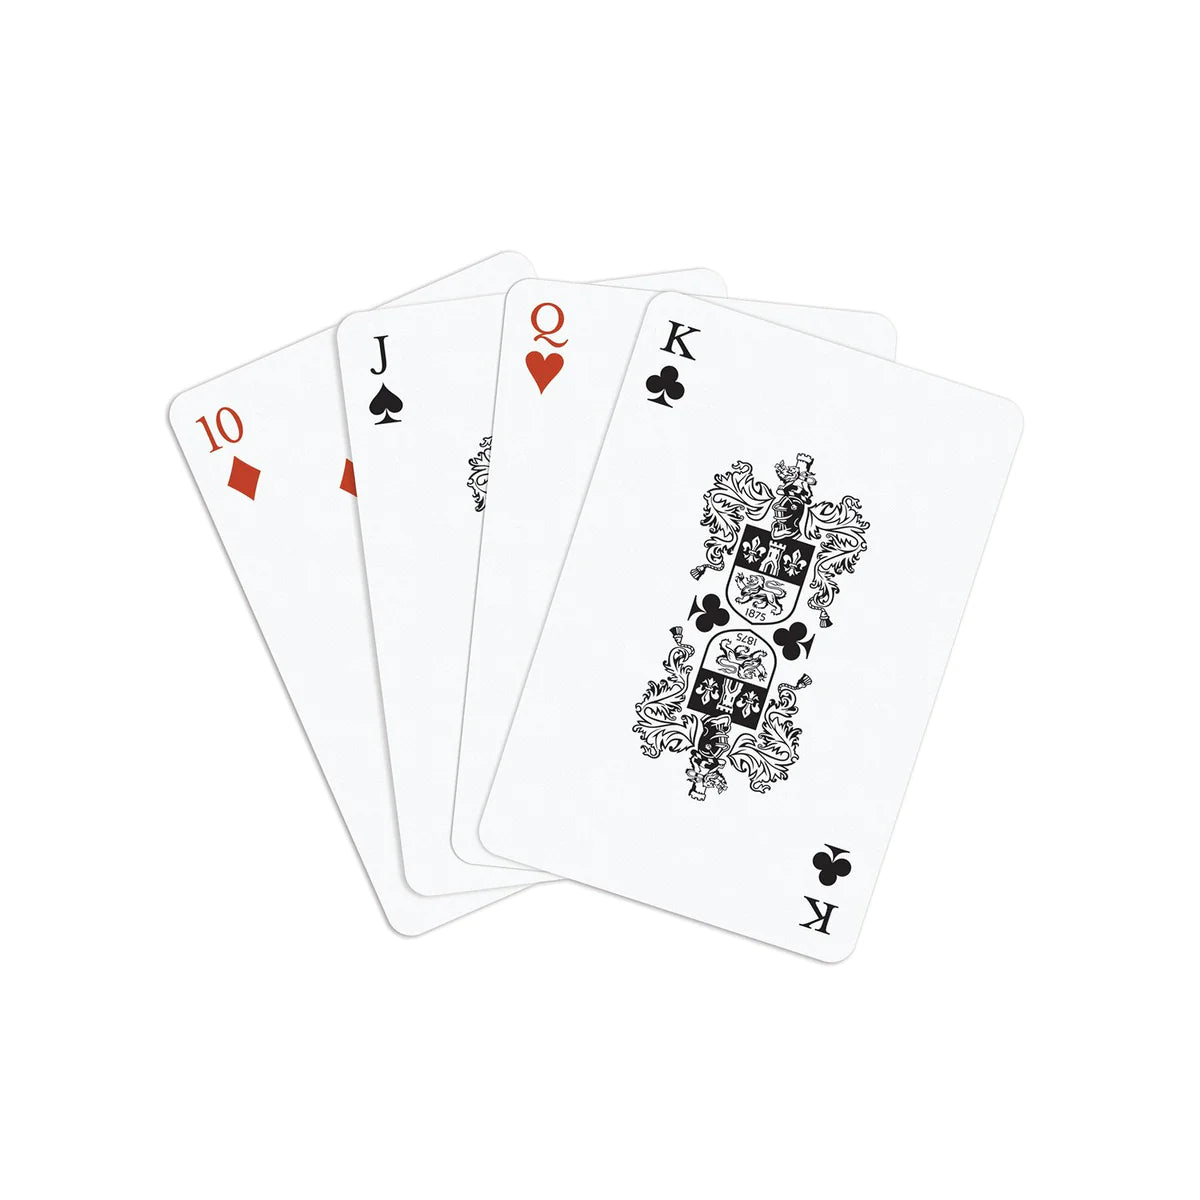 Galison | Liberty Floral Playing Card Set